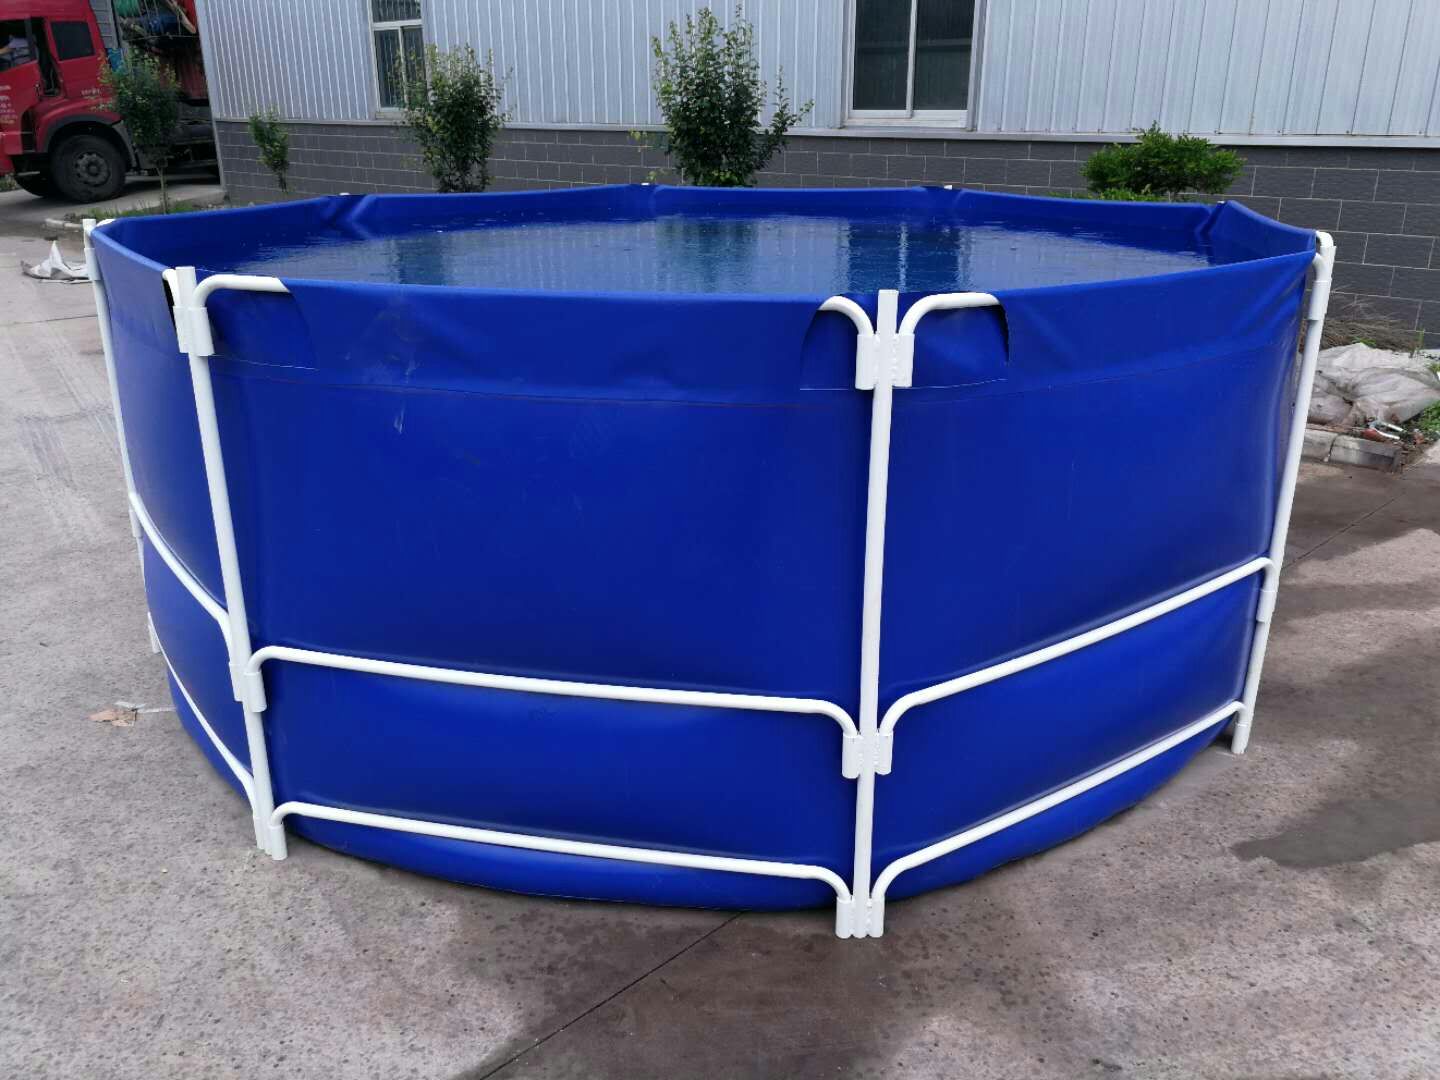 Collapsible Mobile Polygon Fish Pond Foldable Pvc Fish Tank For Shrimp For Sale